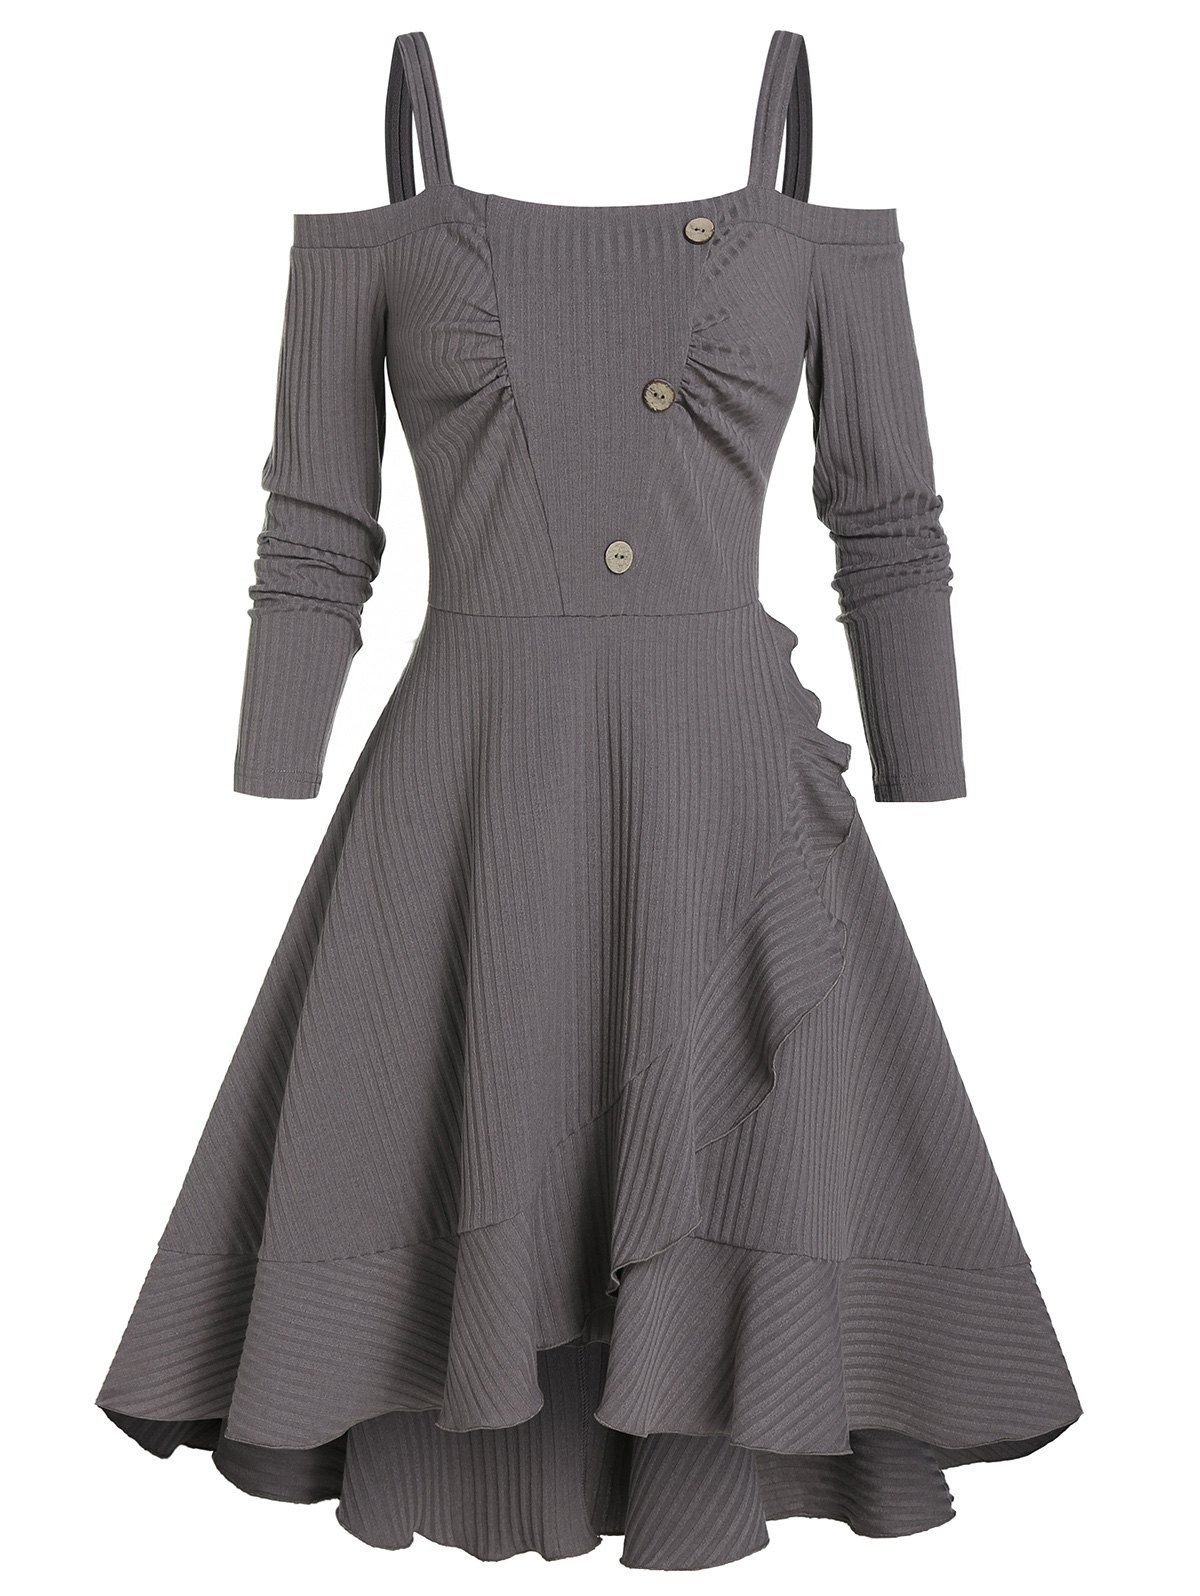 Flounce Layered Asymmetry Cold Shoulder Dress - GRAY 3XL